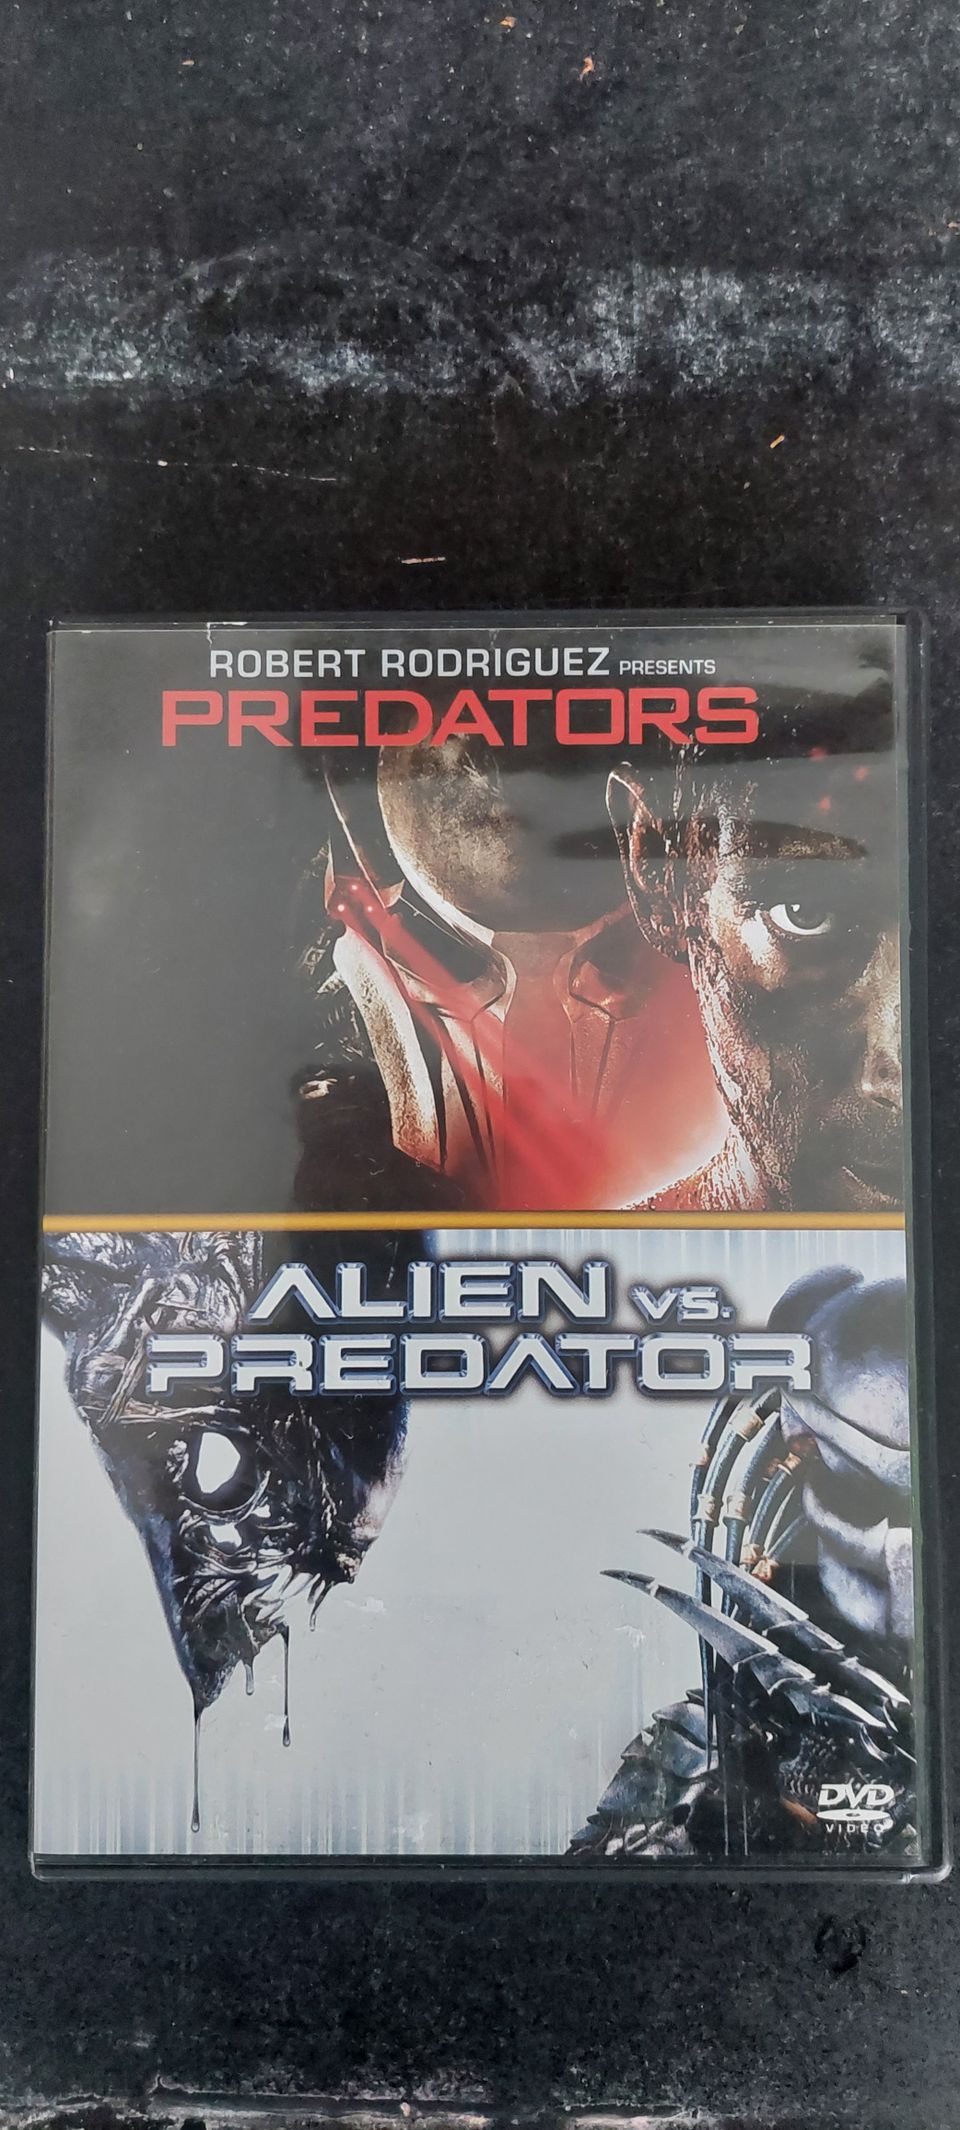 Predators, Alien vs. Predator 2 DVD